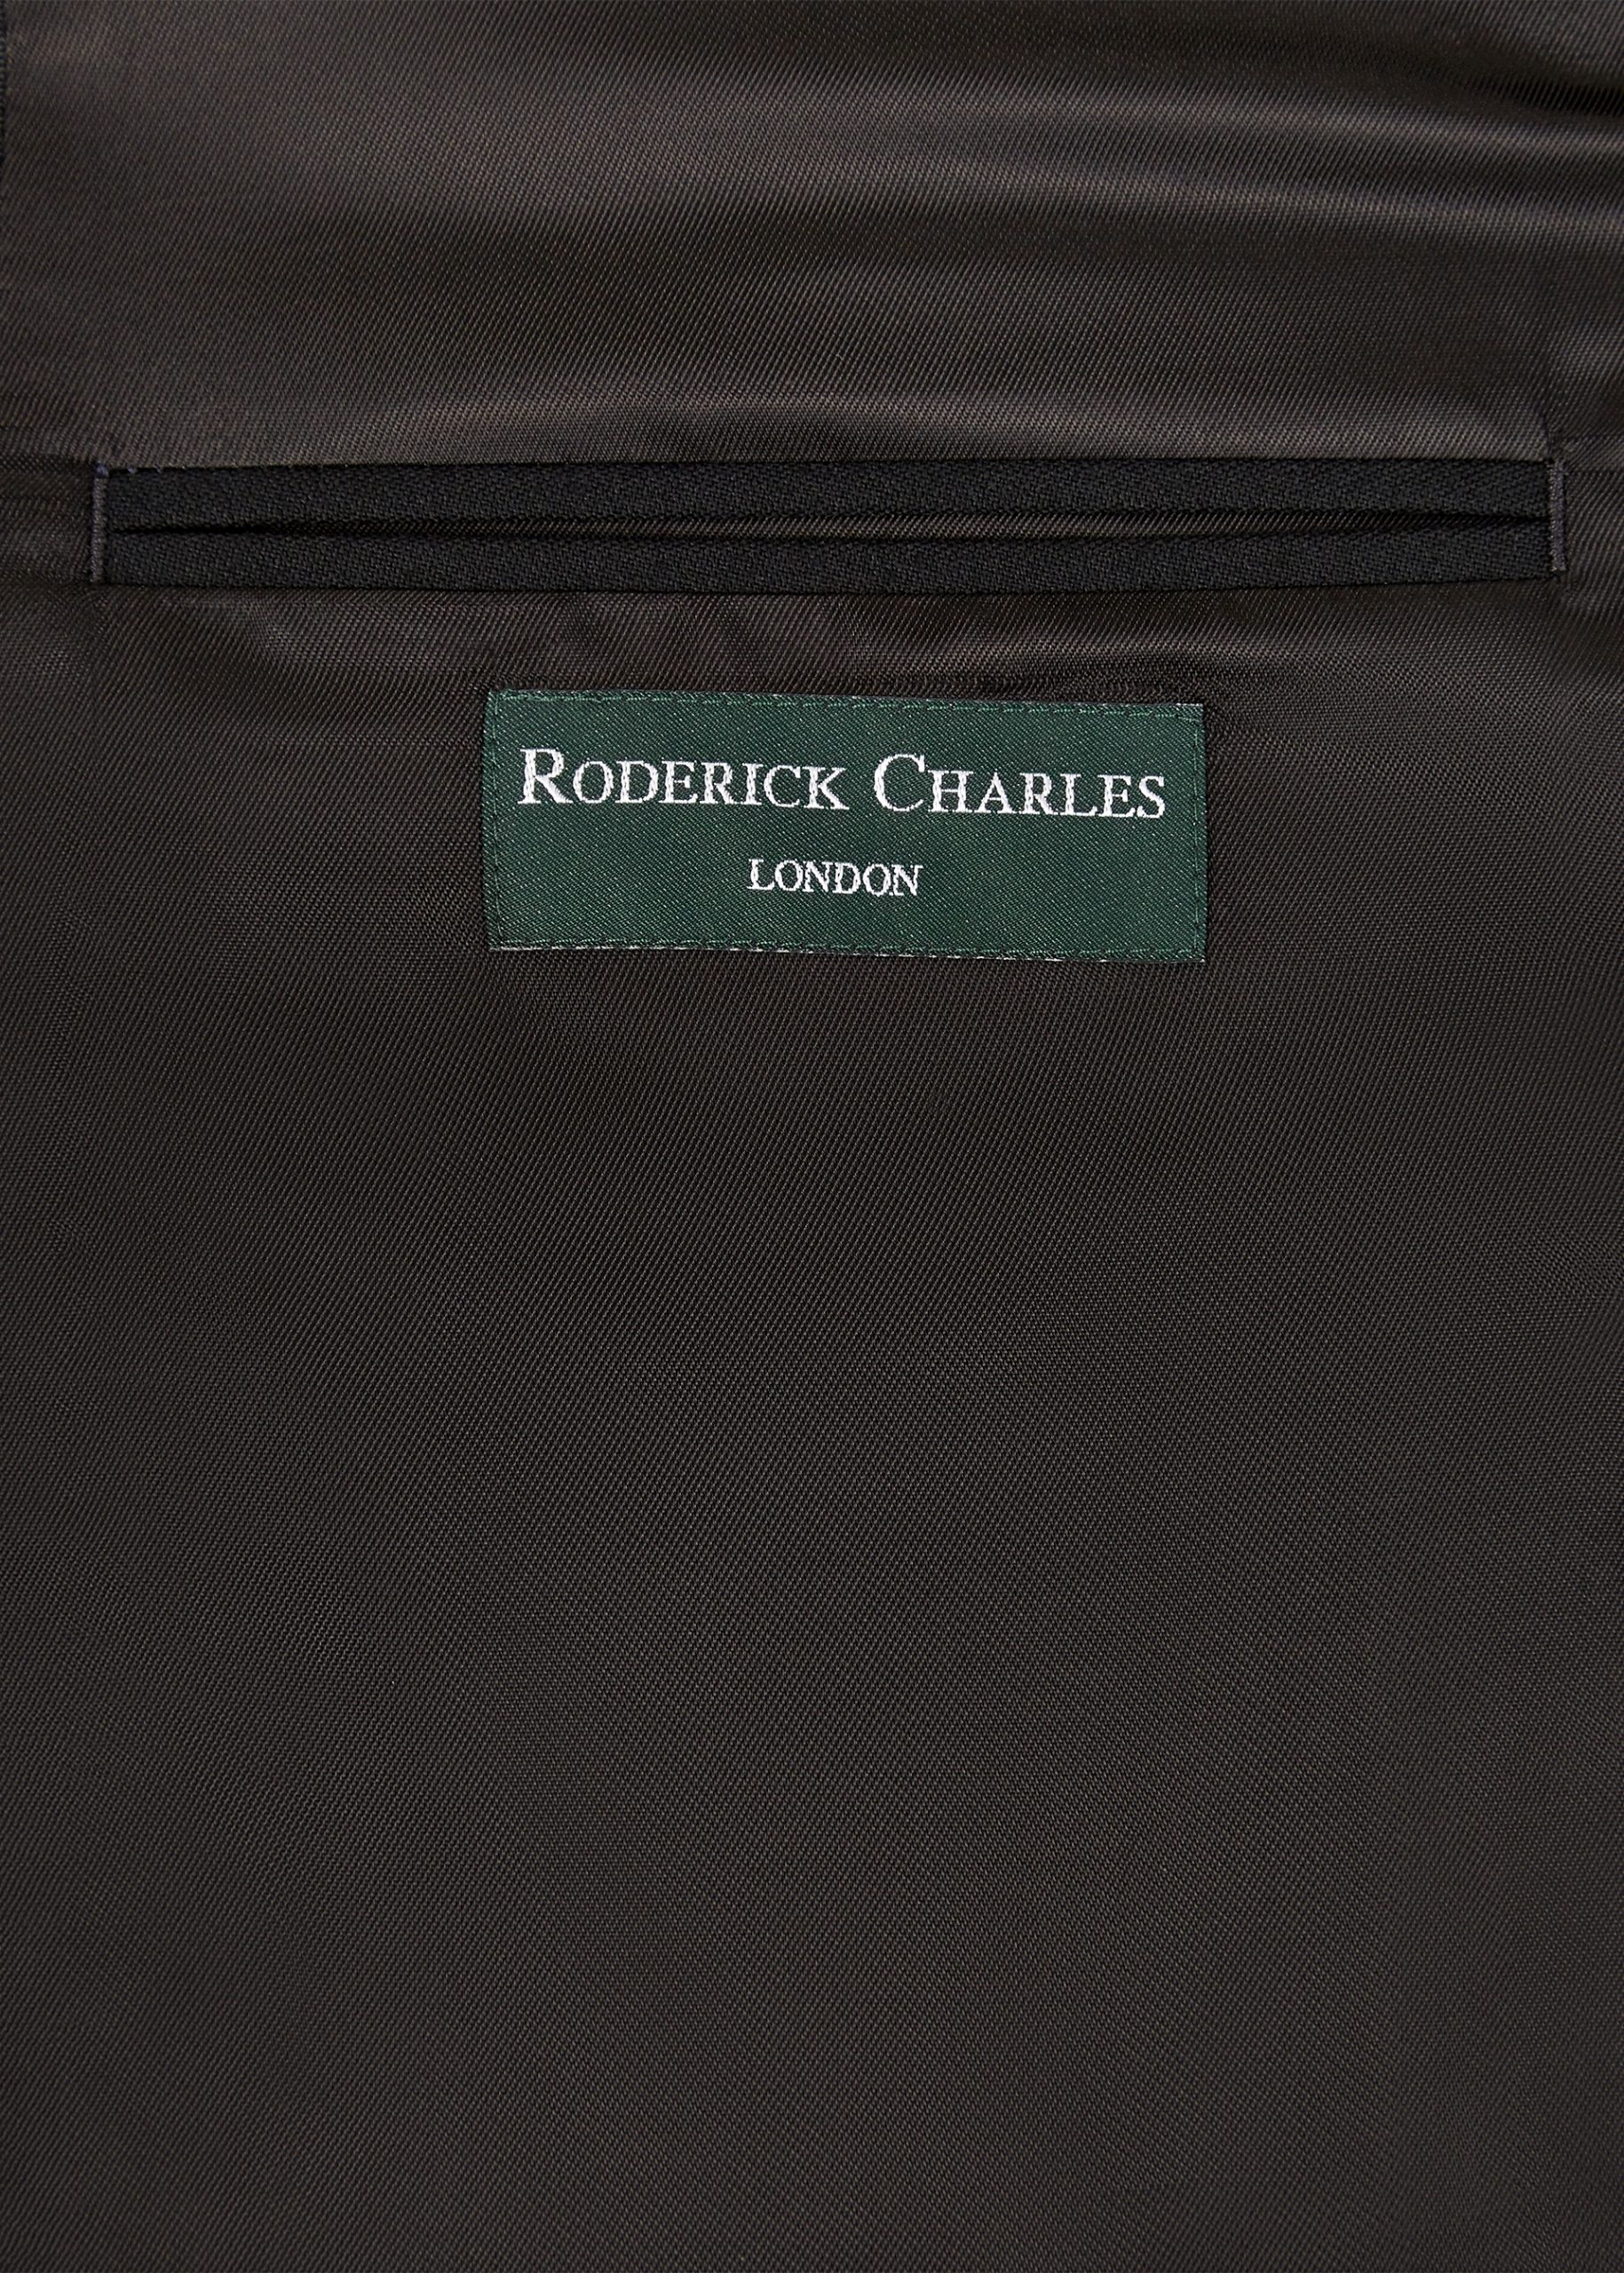 Roderick Charles formal wear dinner suit in black